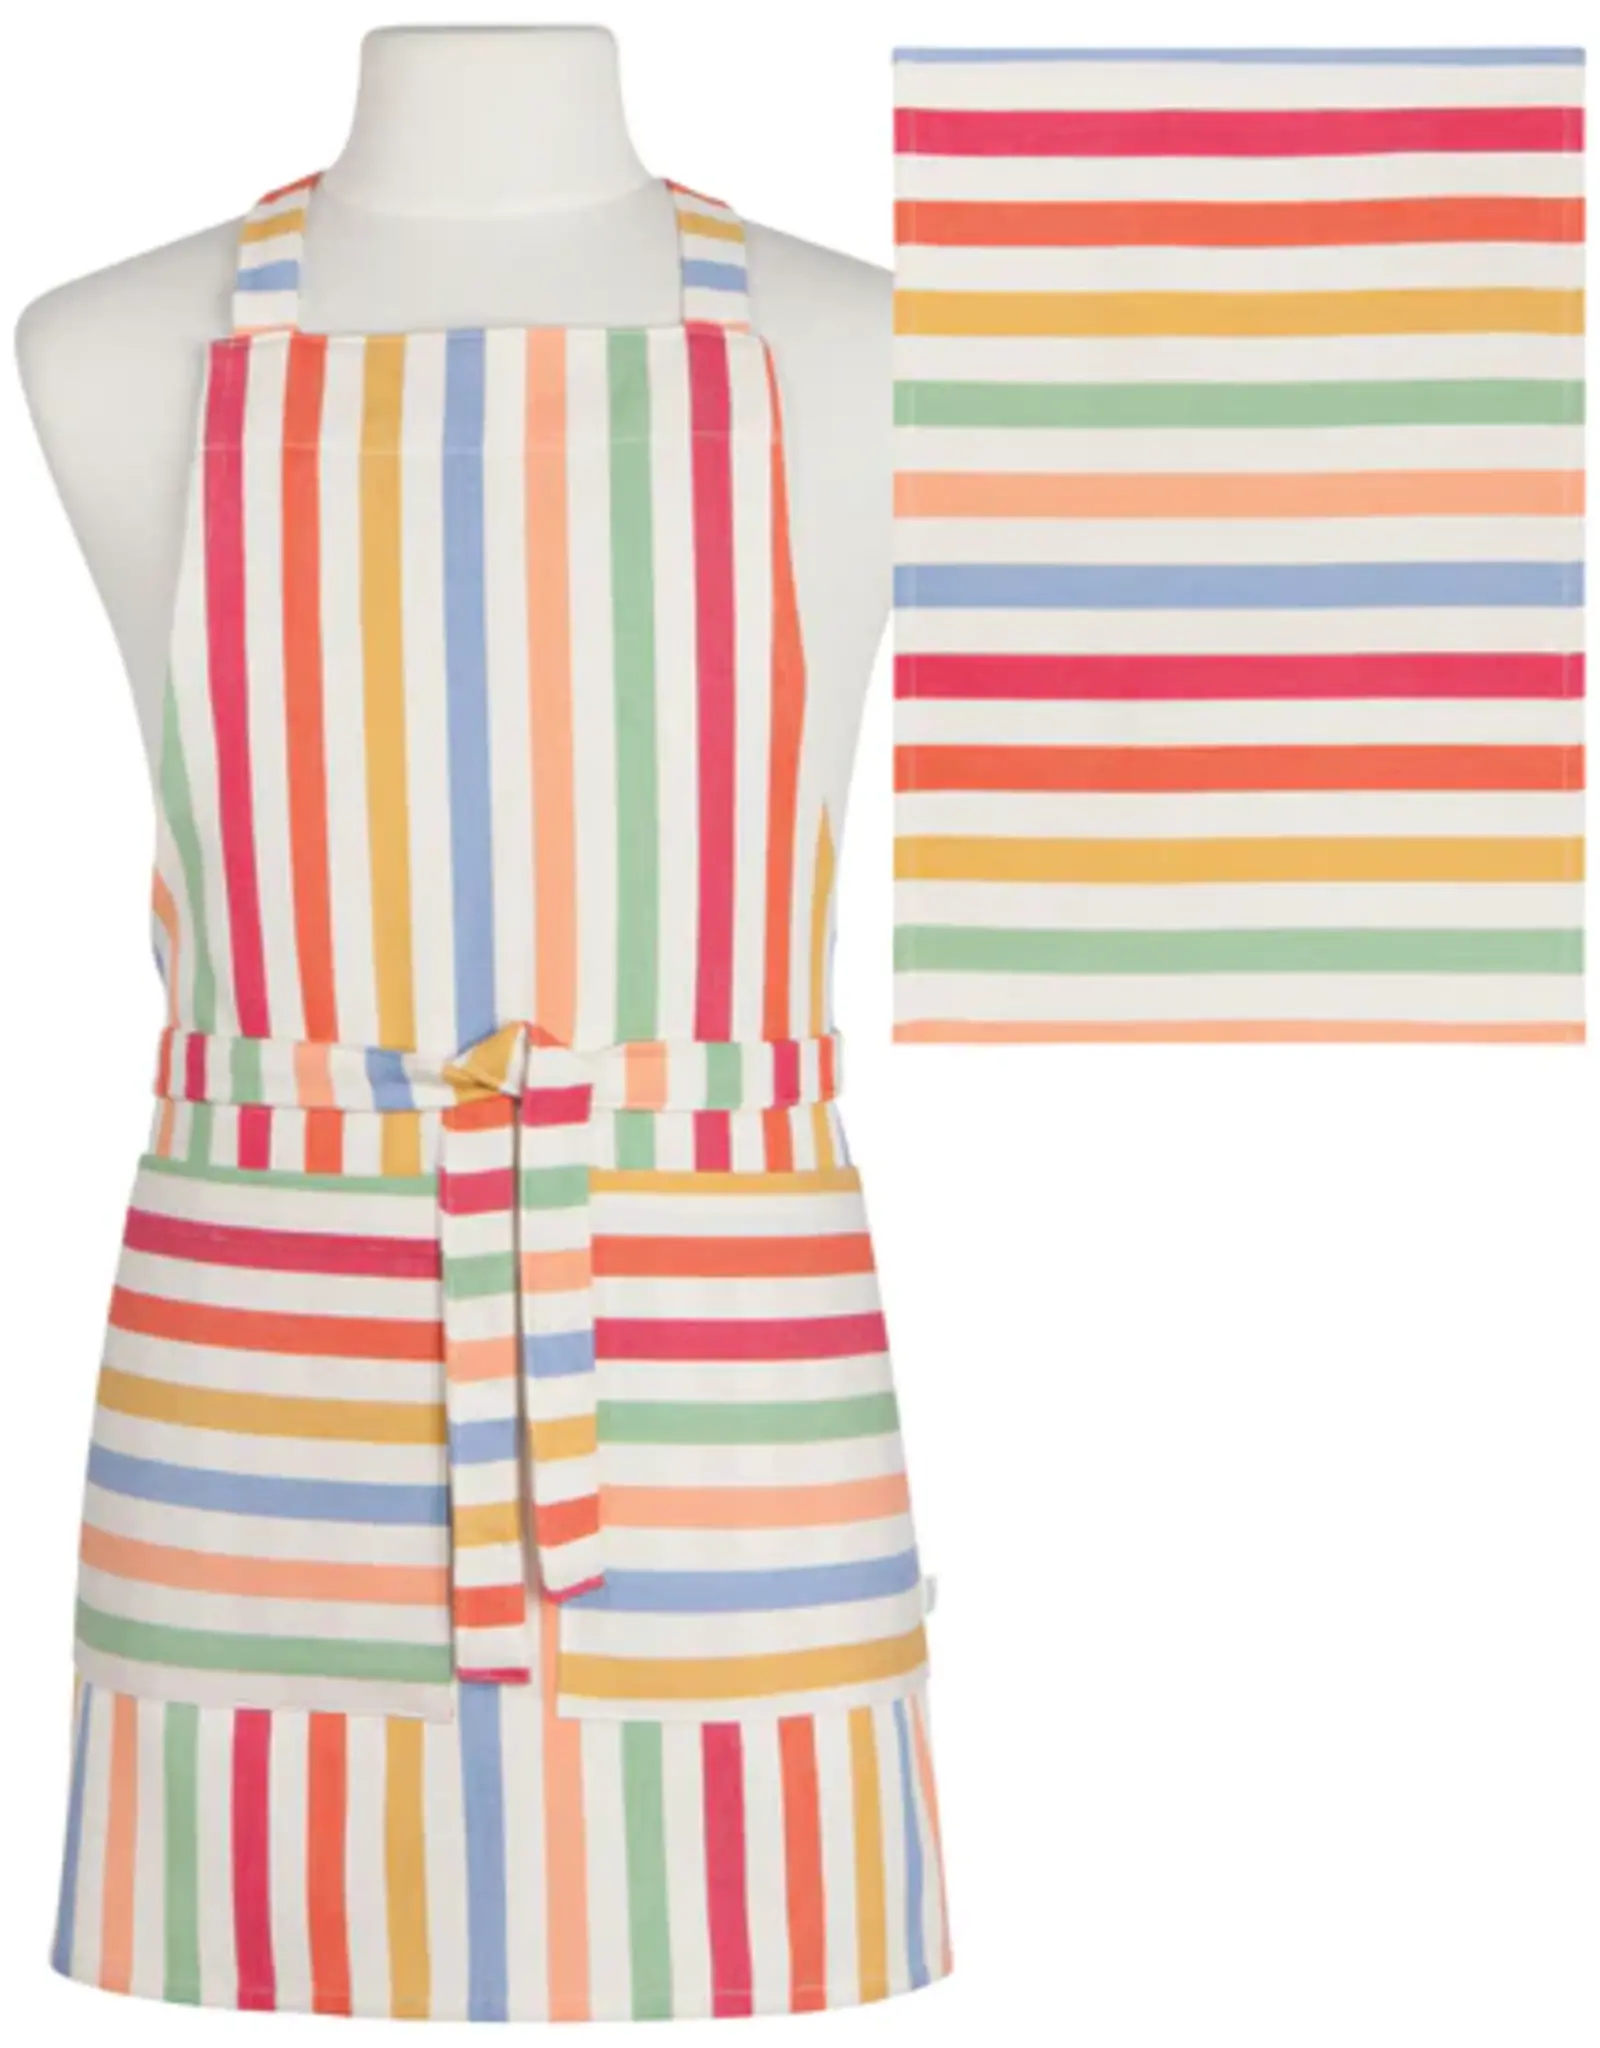 Danica + Now Designs Apron - Set of 2 with Tea Towel: Color Parade